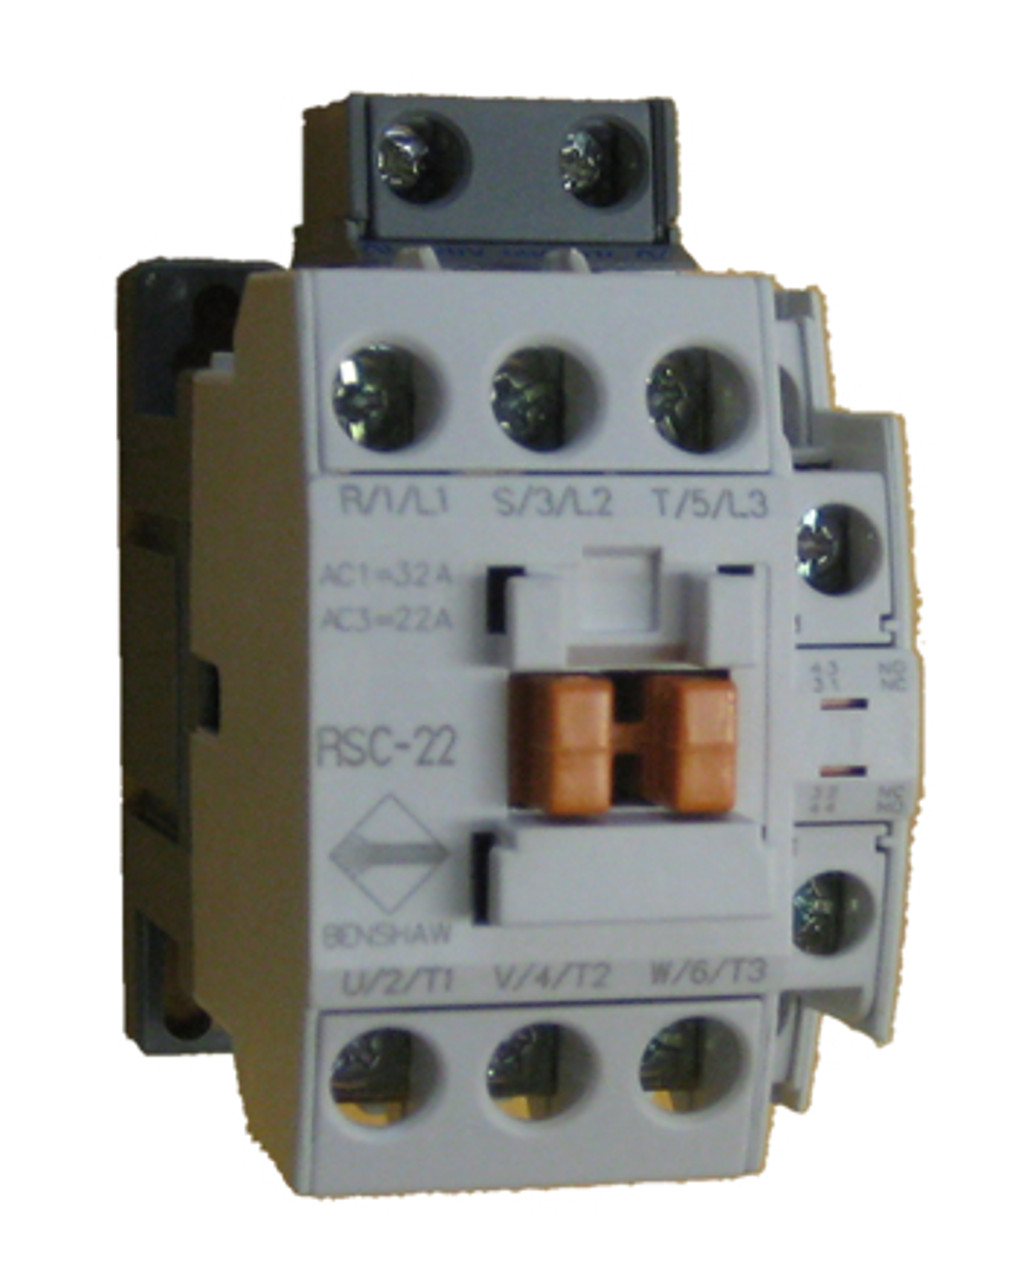 Benshaw RSC-22-6AC480 contactor